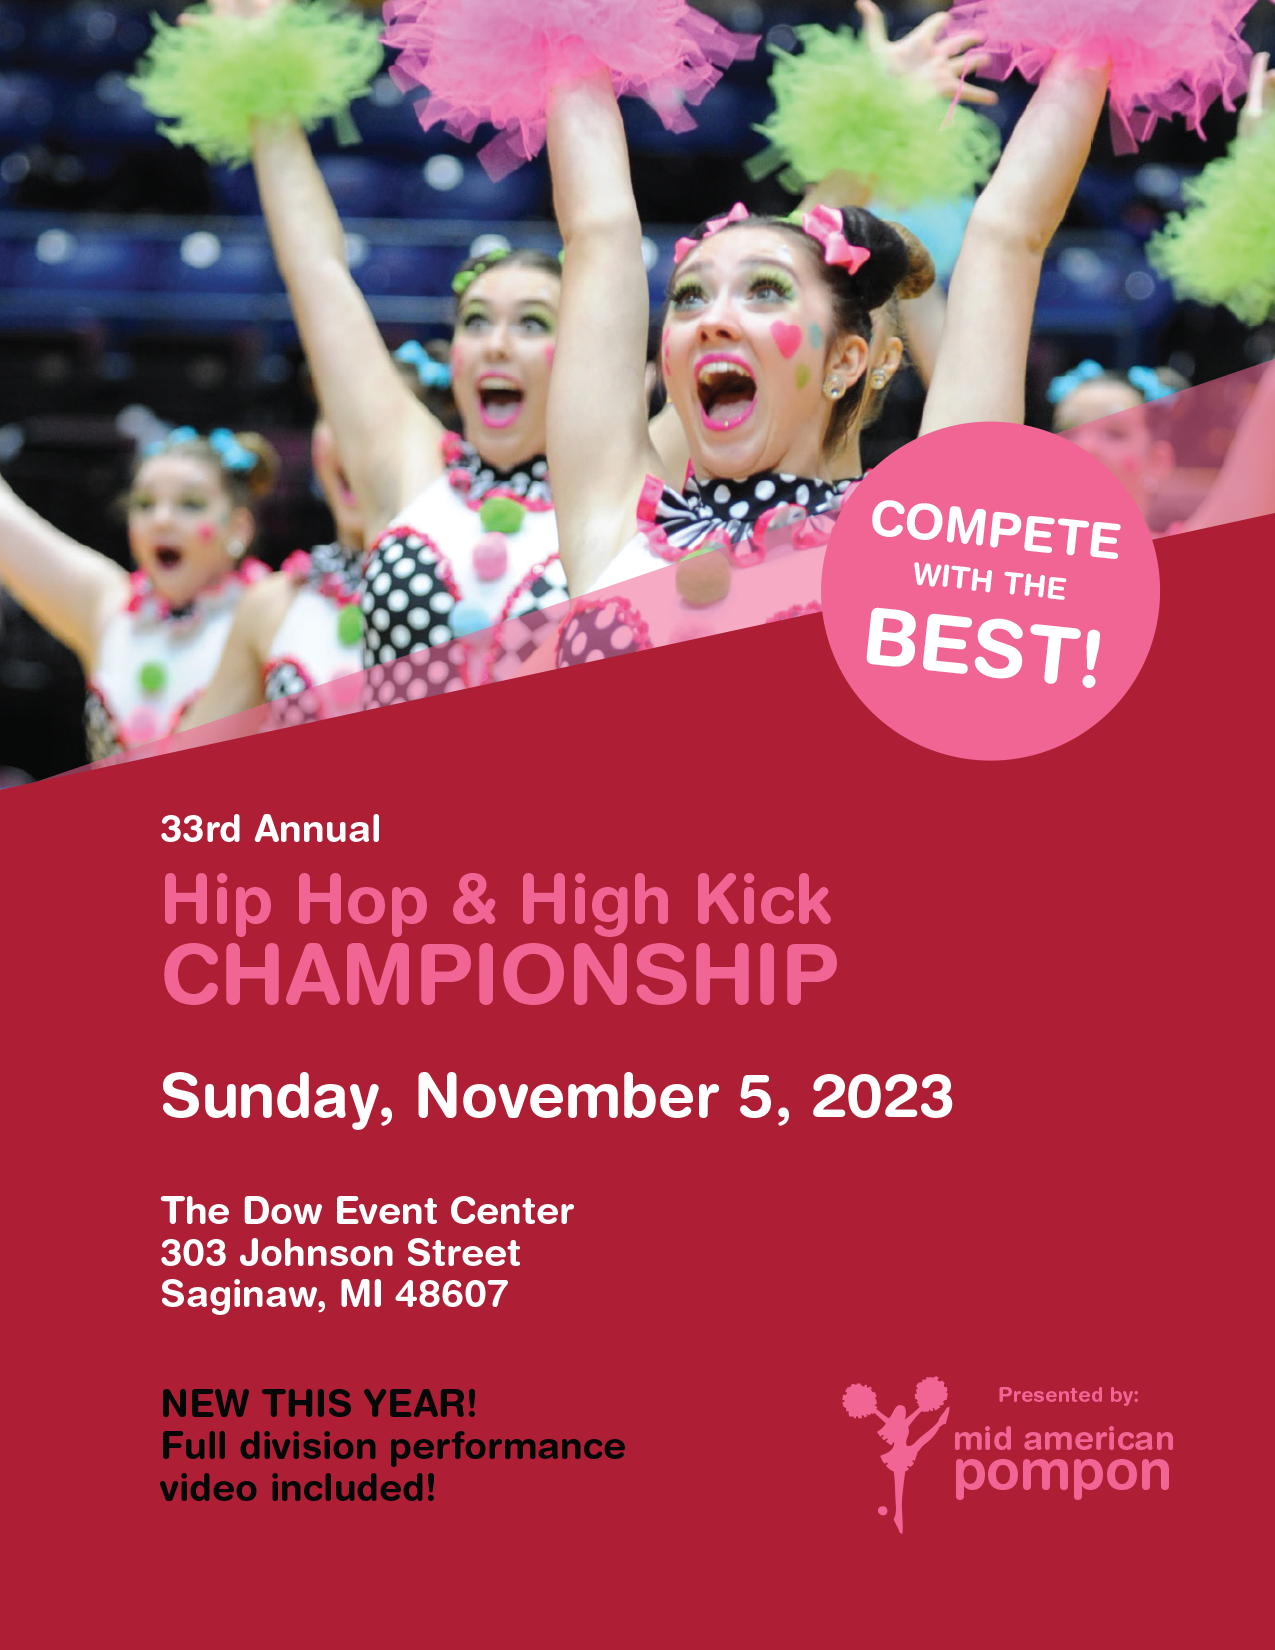 Hip Hop & High Kick championship Sunday, November 5, 2023